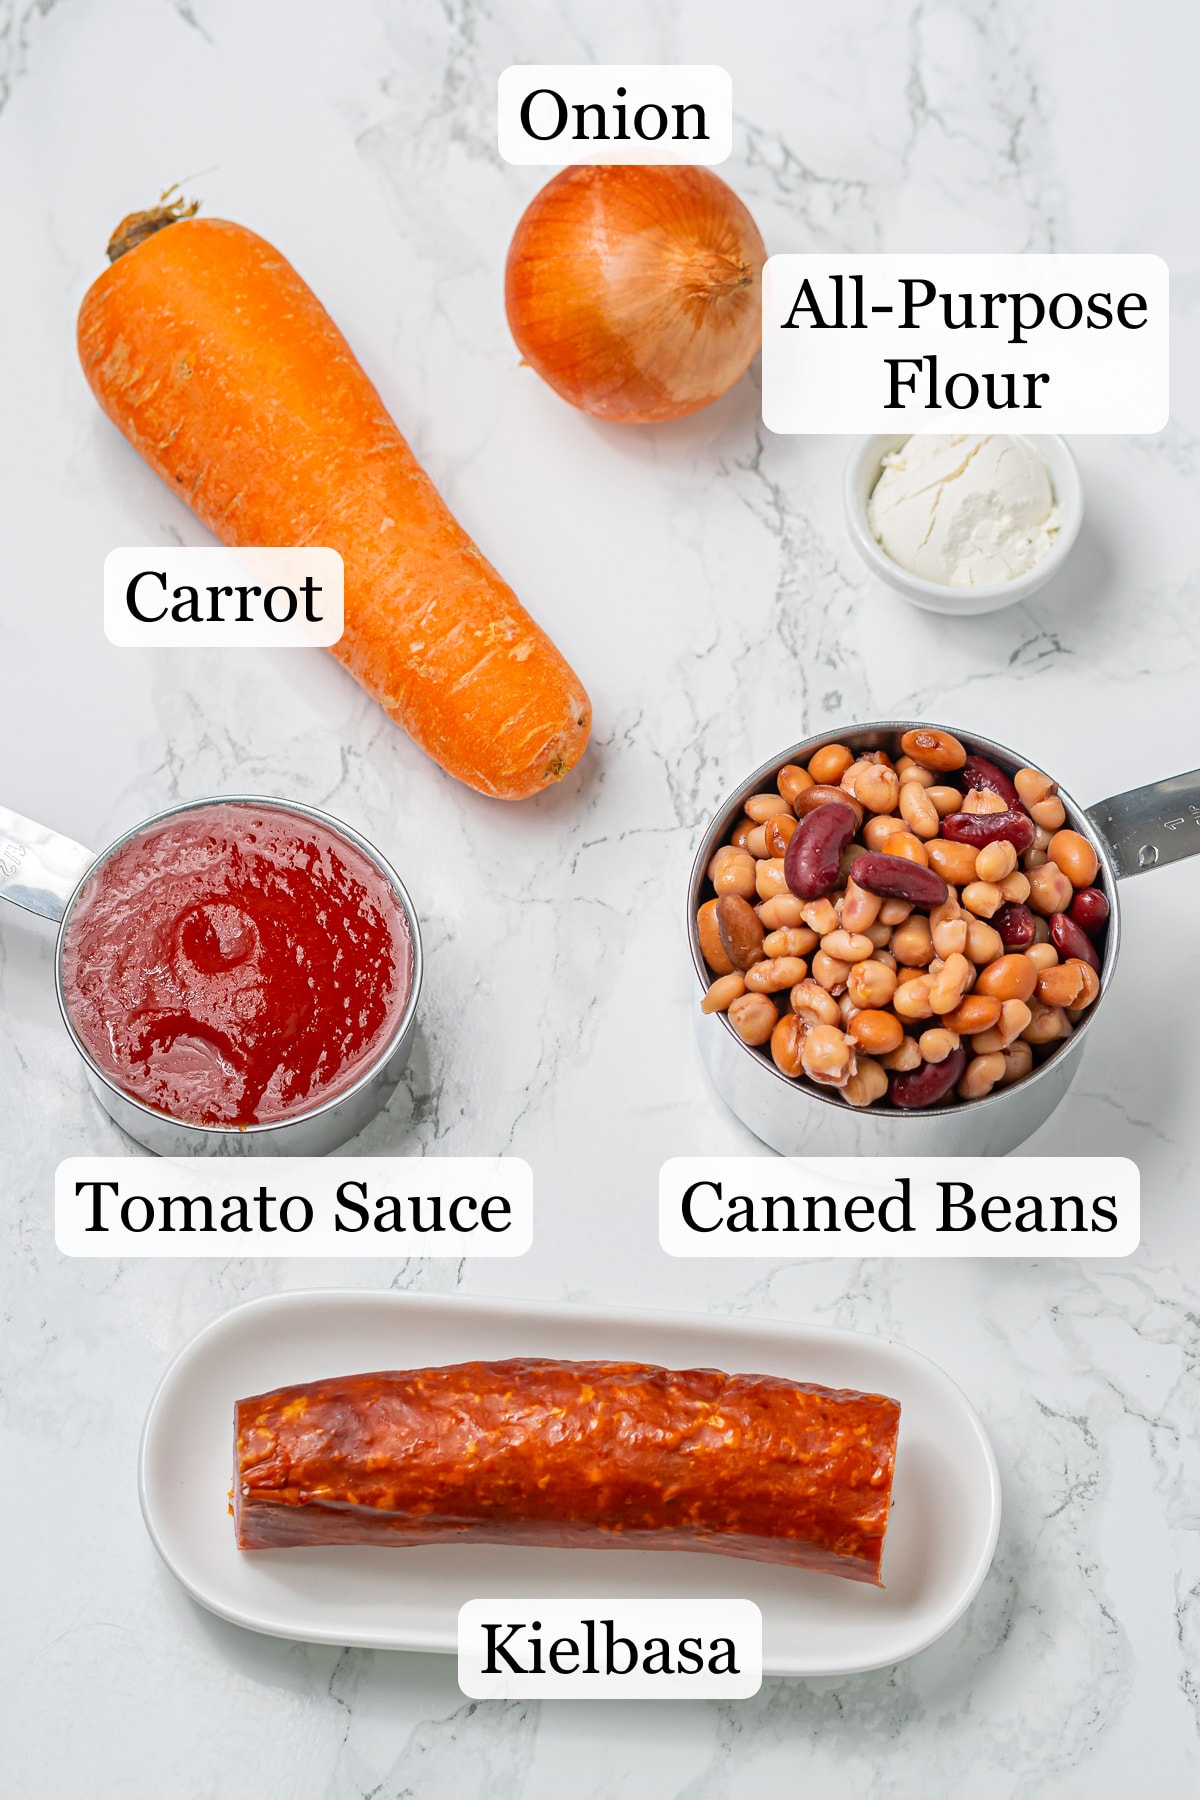 Ingredients for kielbasa bean soup: carrot, onion, tomato sauce, mixed beans, cream cheese, and kielbasa sausage.